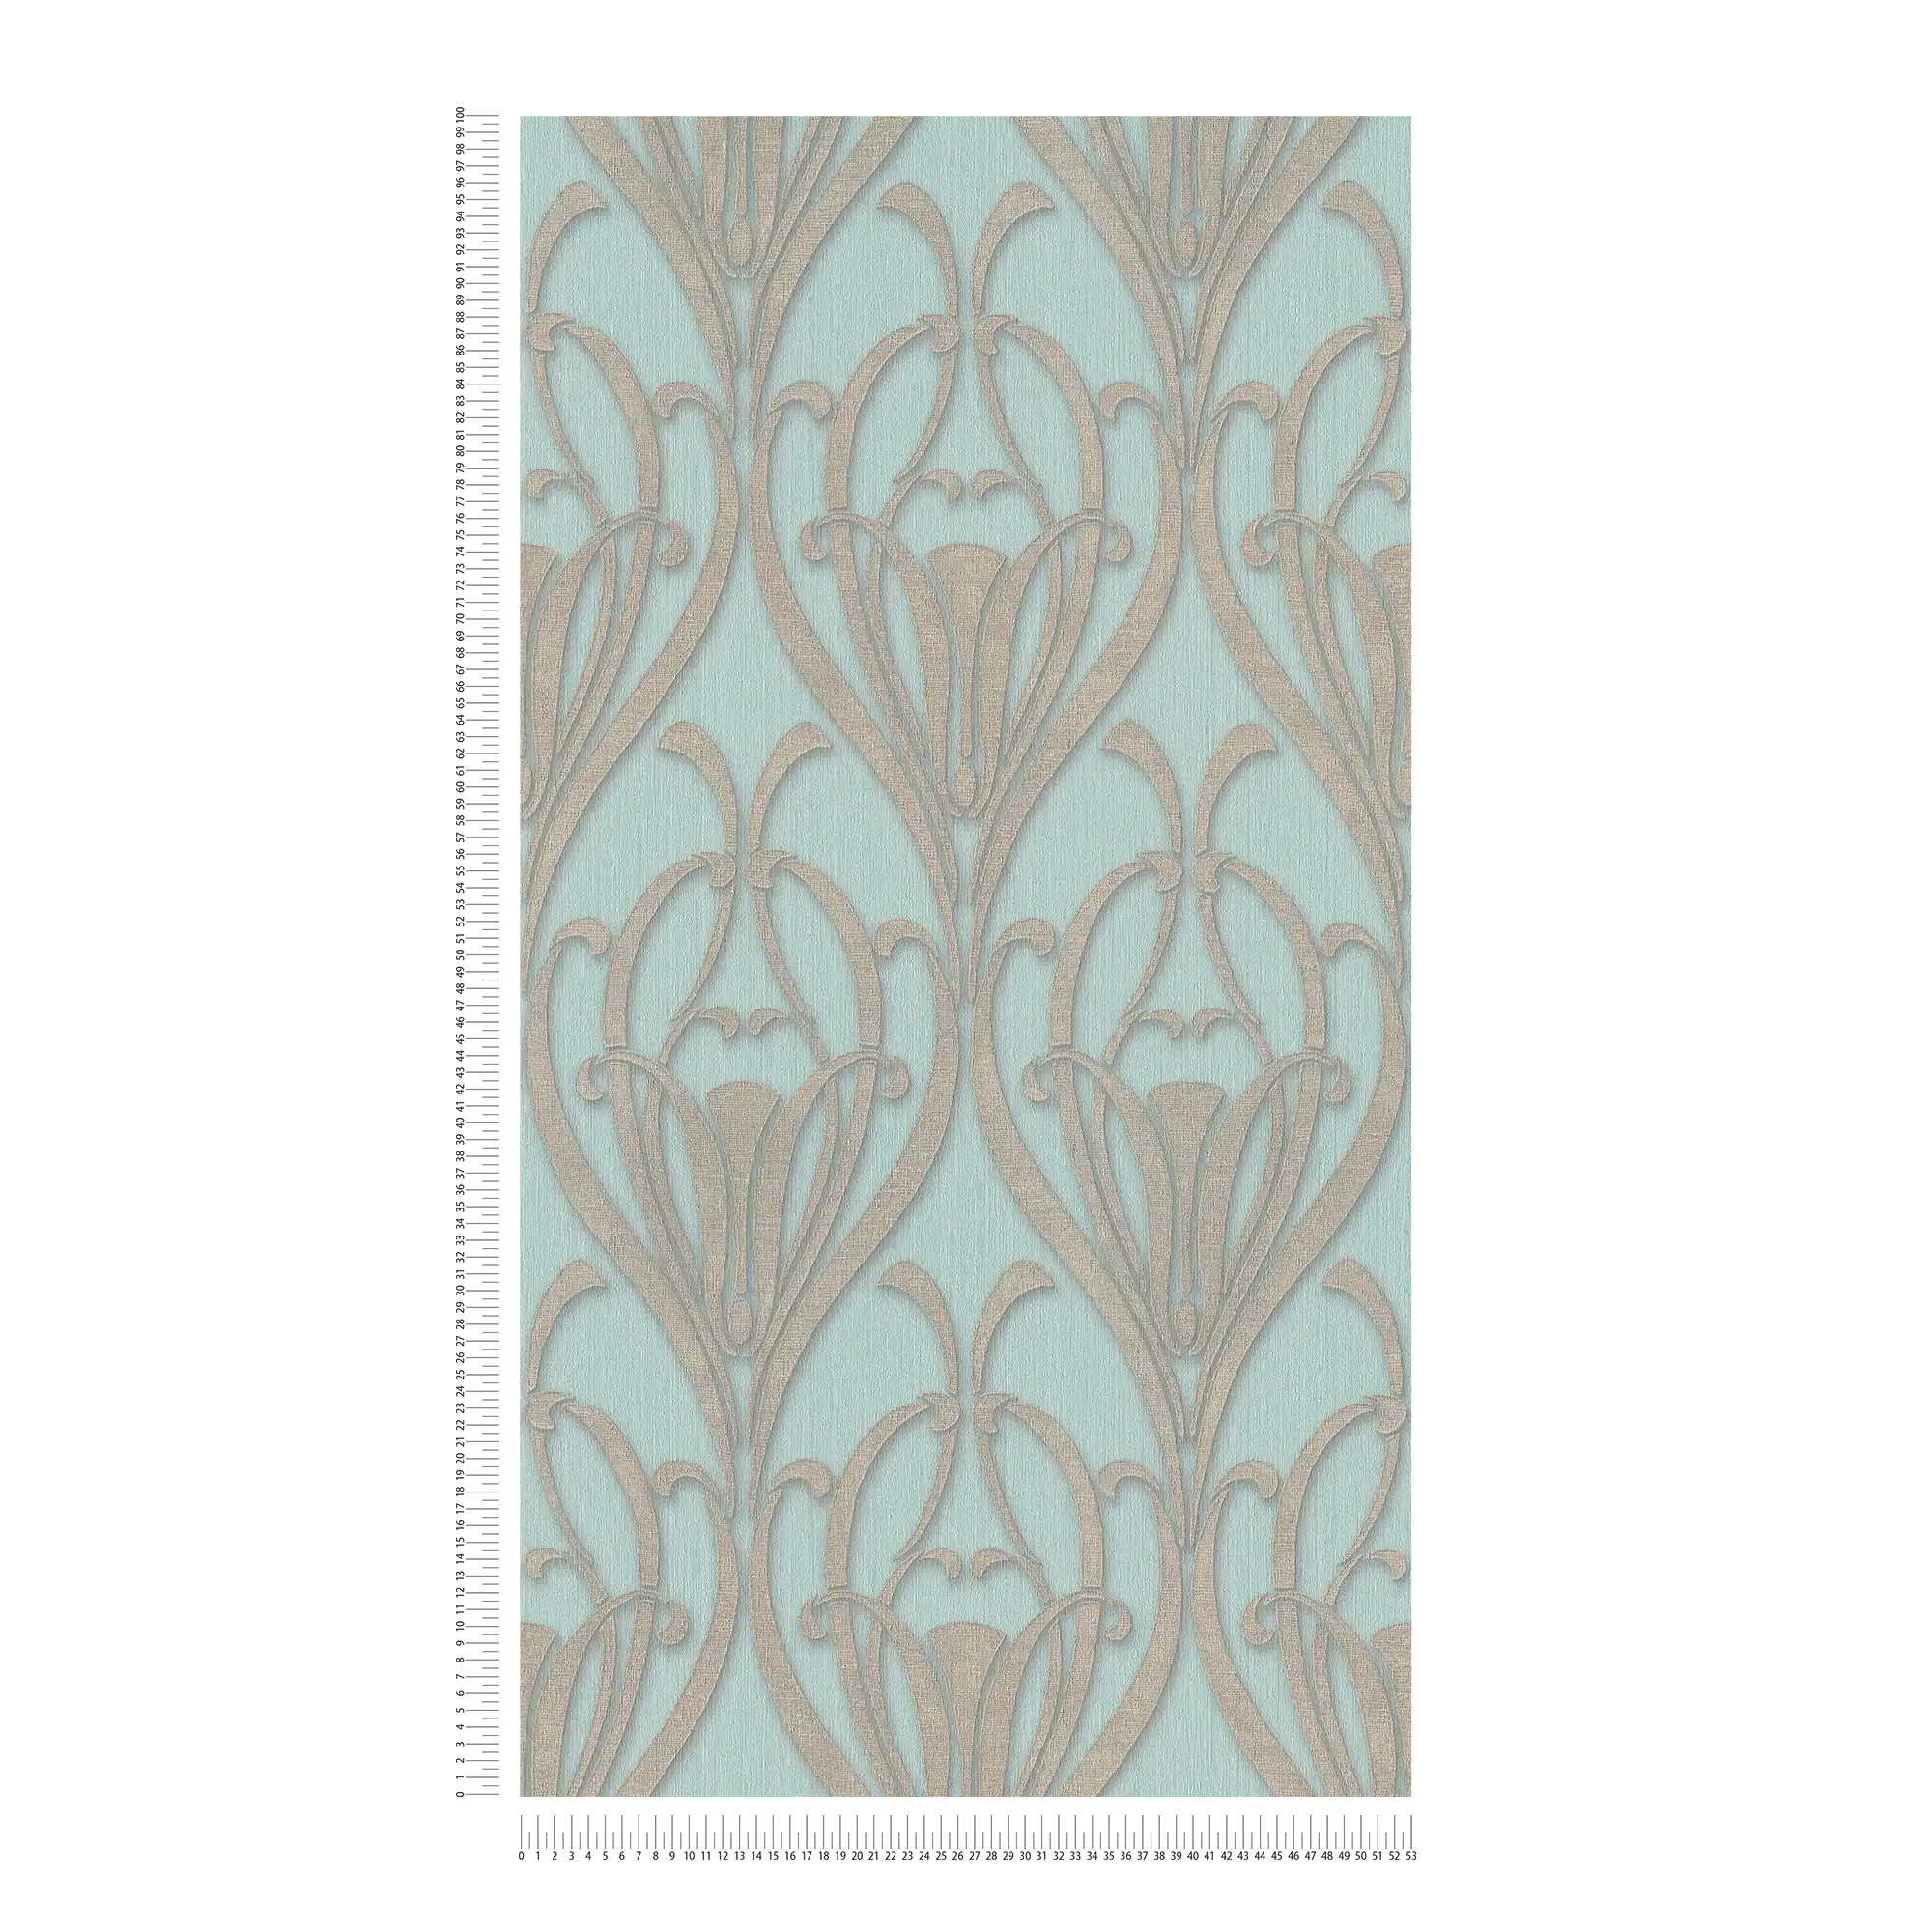             Mintgrüne Tapete Art Deco Muster mit Struktureffekt
        